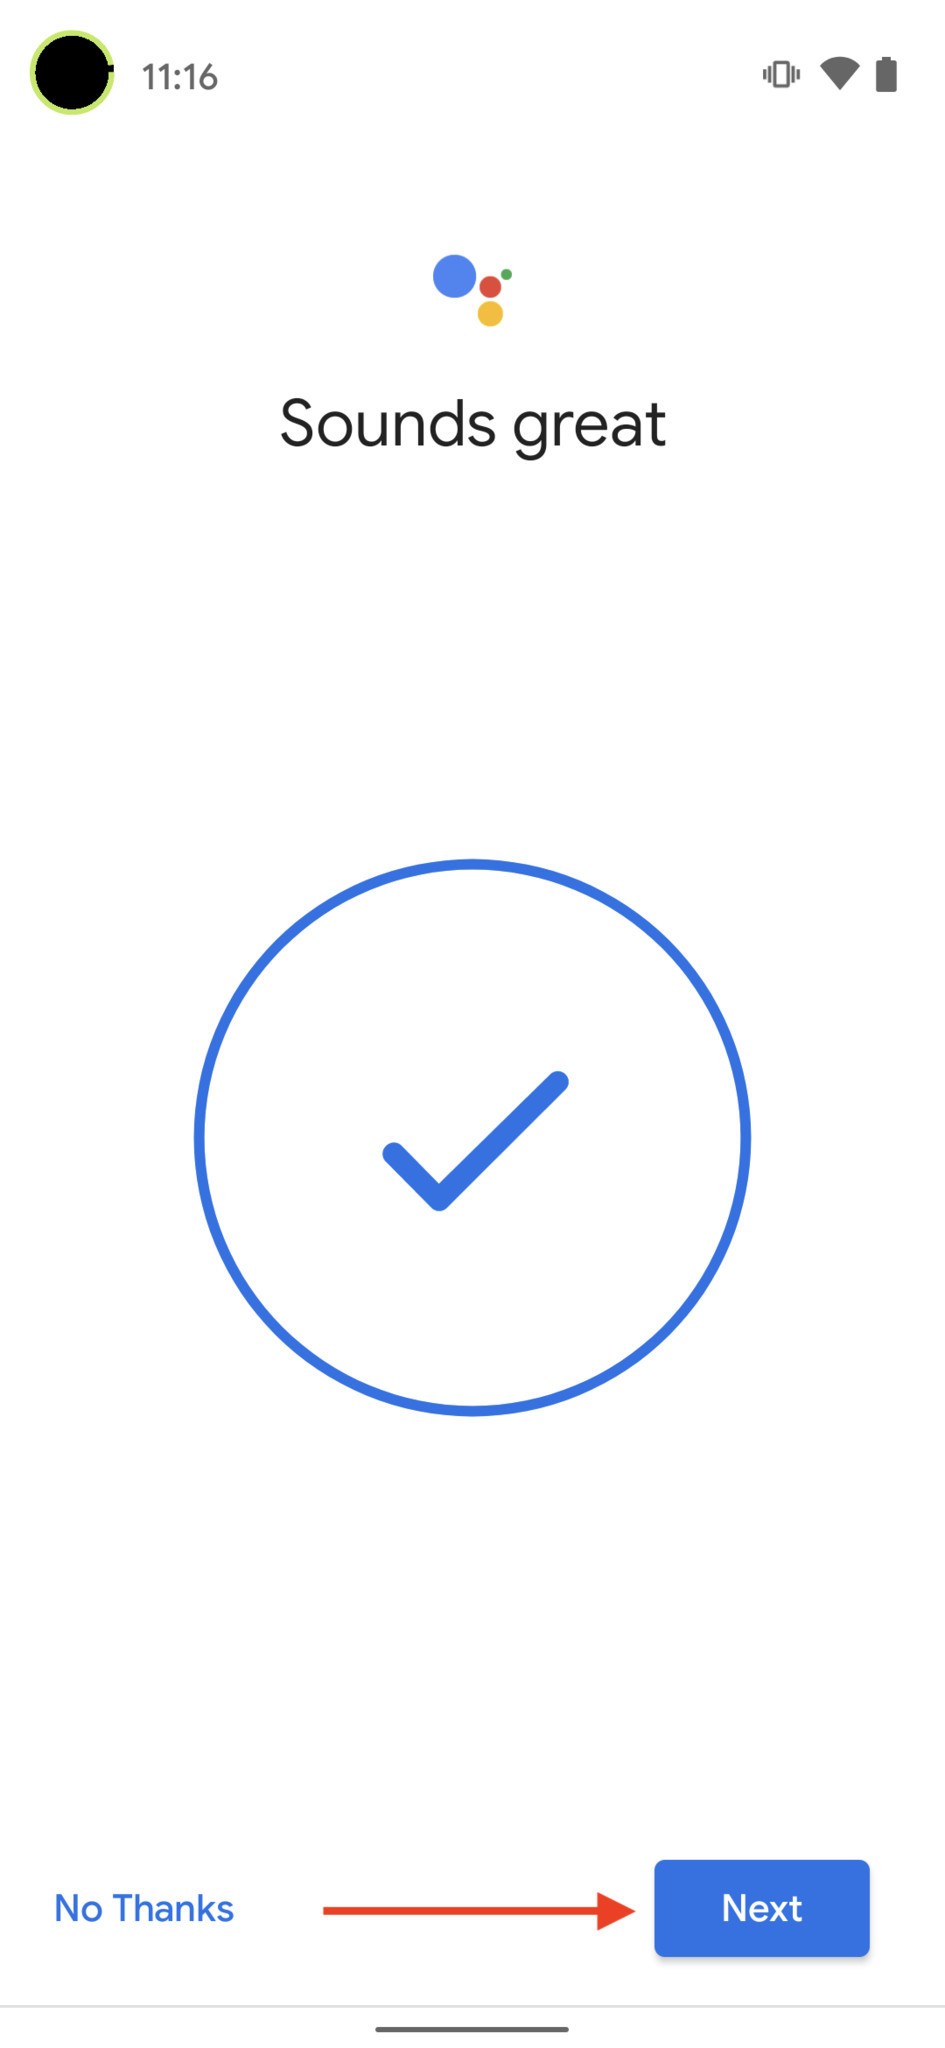 Bật tính năng Voice Match của Google Assistant